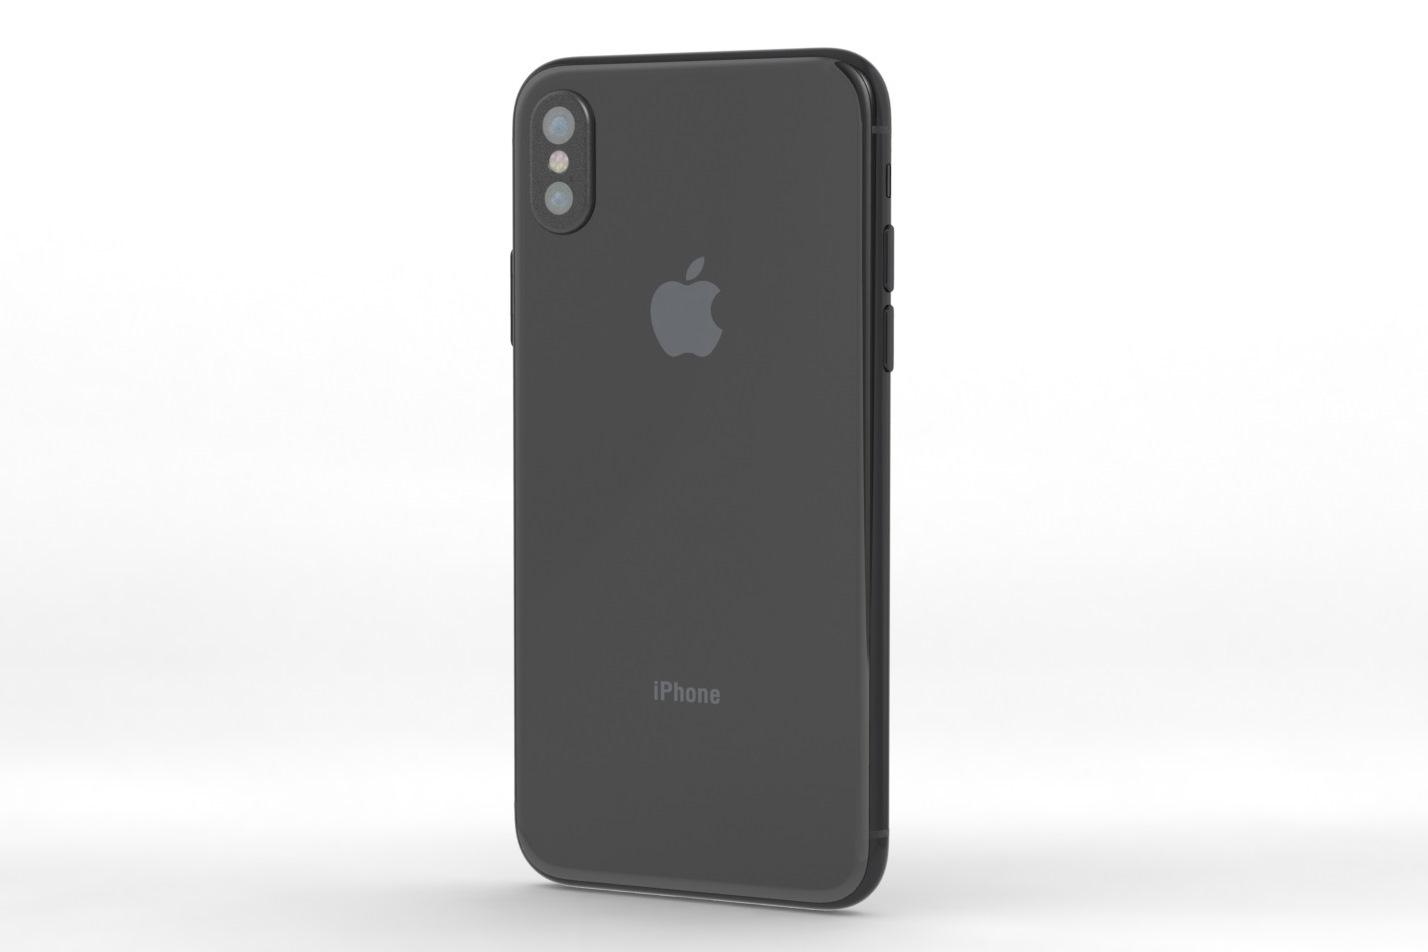 Apple iPhone 8 render